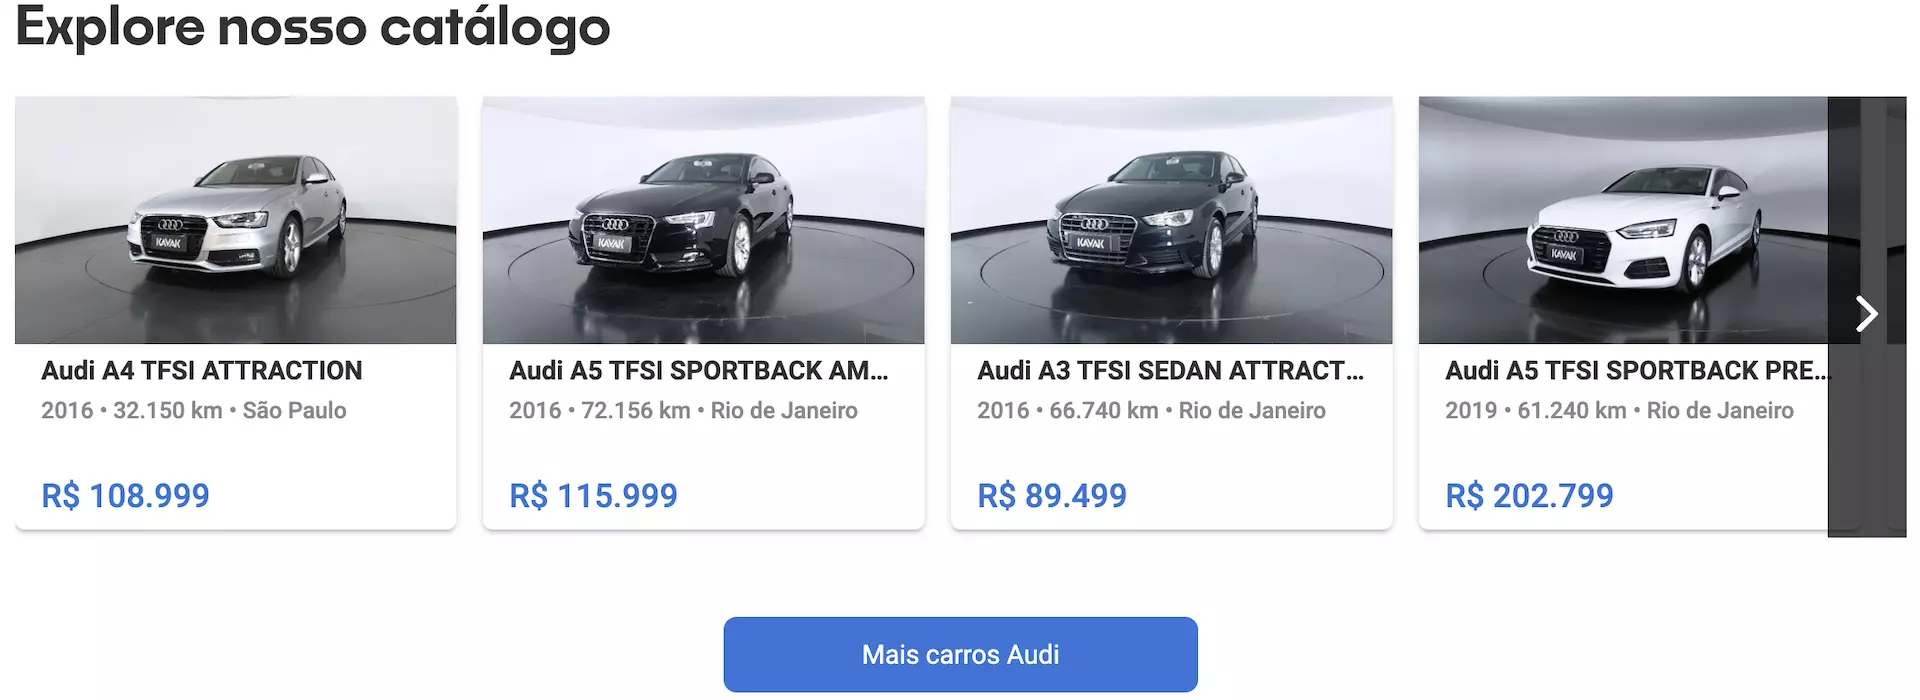 Carros Audi Preço